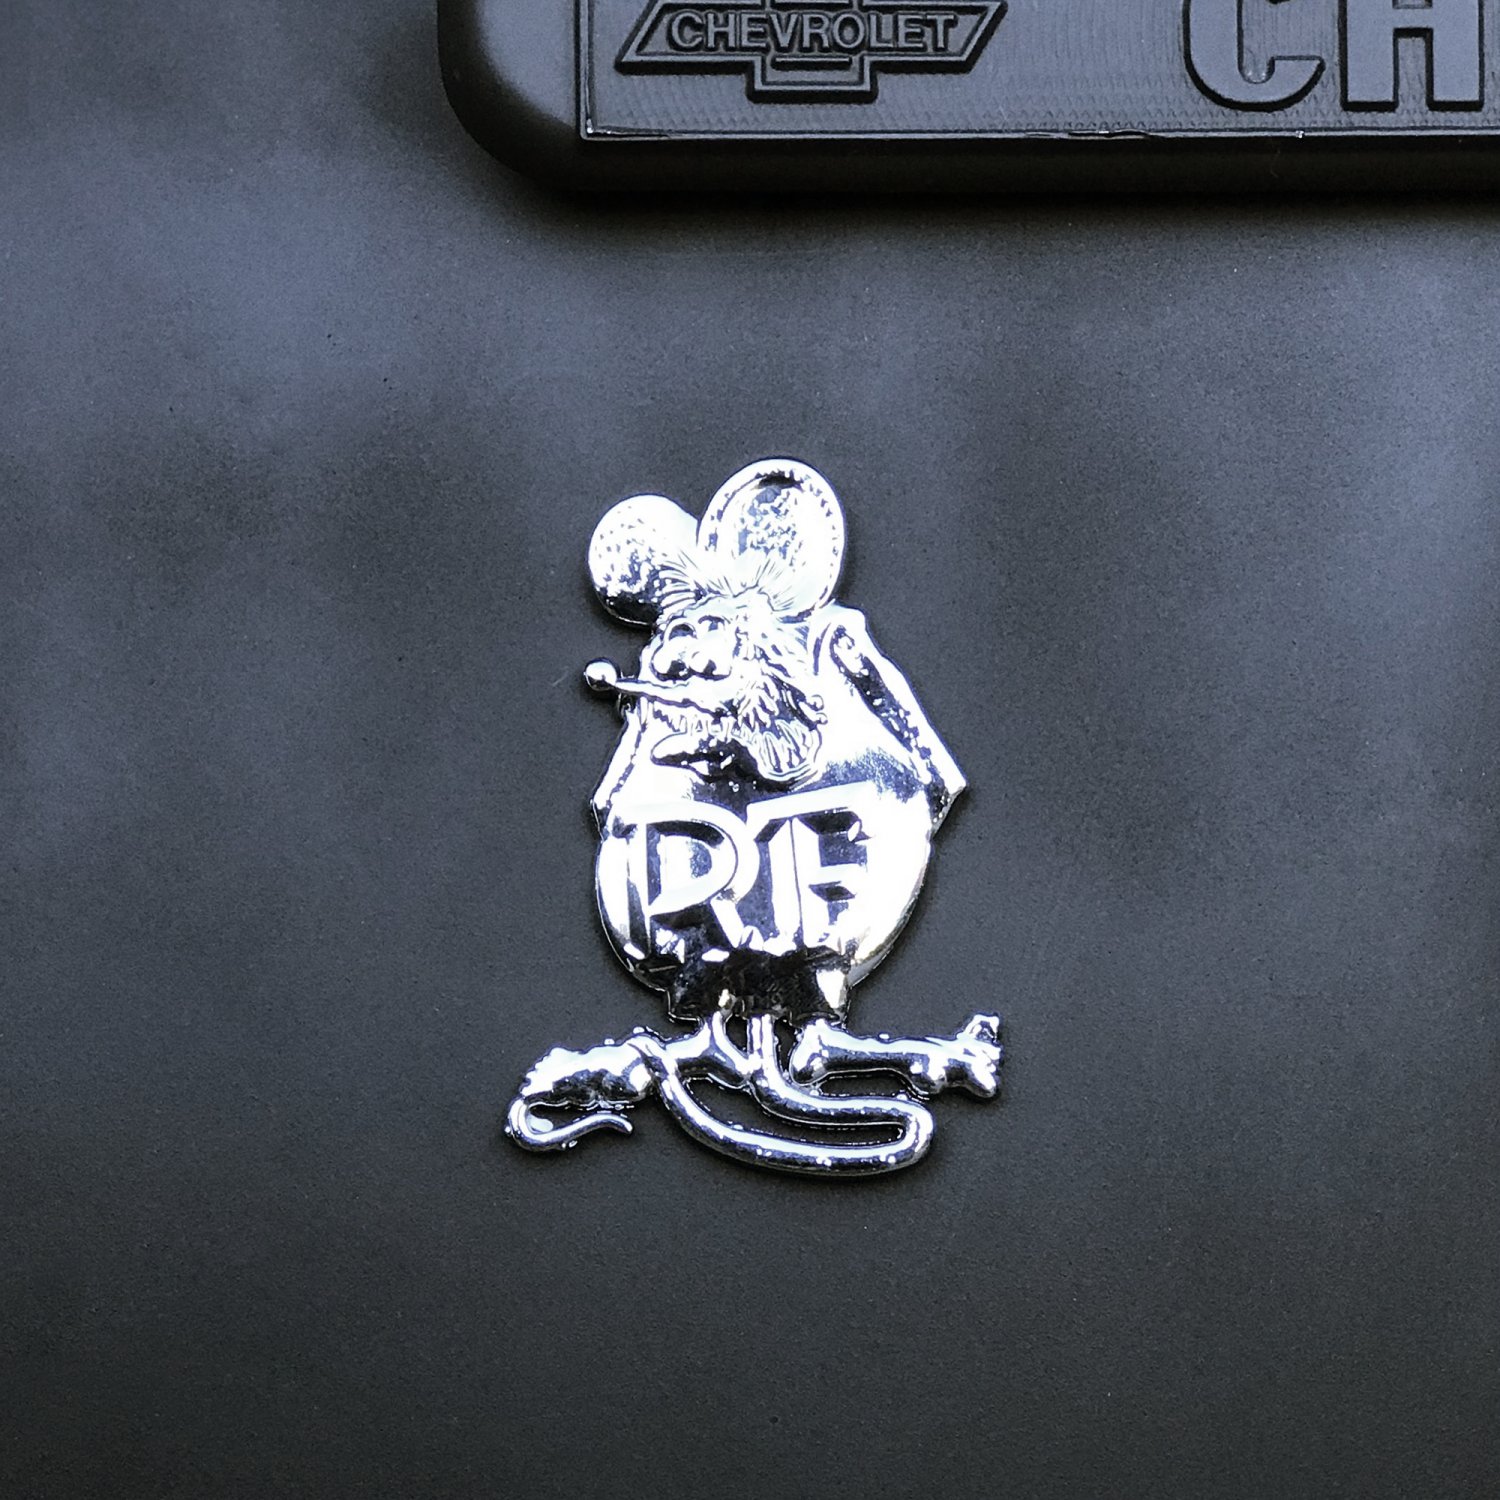 RAT FINK METAL EMBLEM 3 1//8th inches Chrome Car Badge suit Chevrolet RatFi...